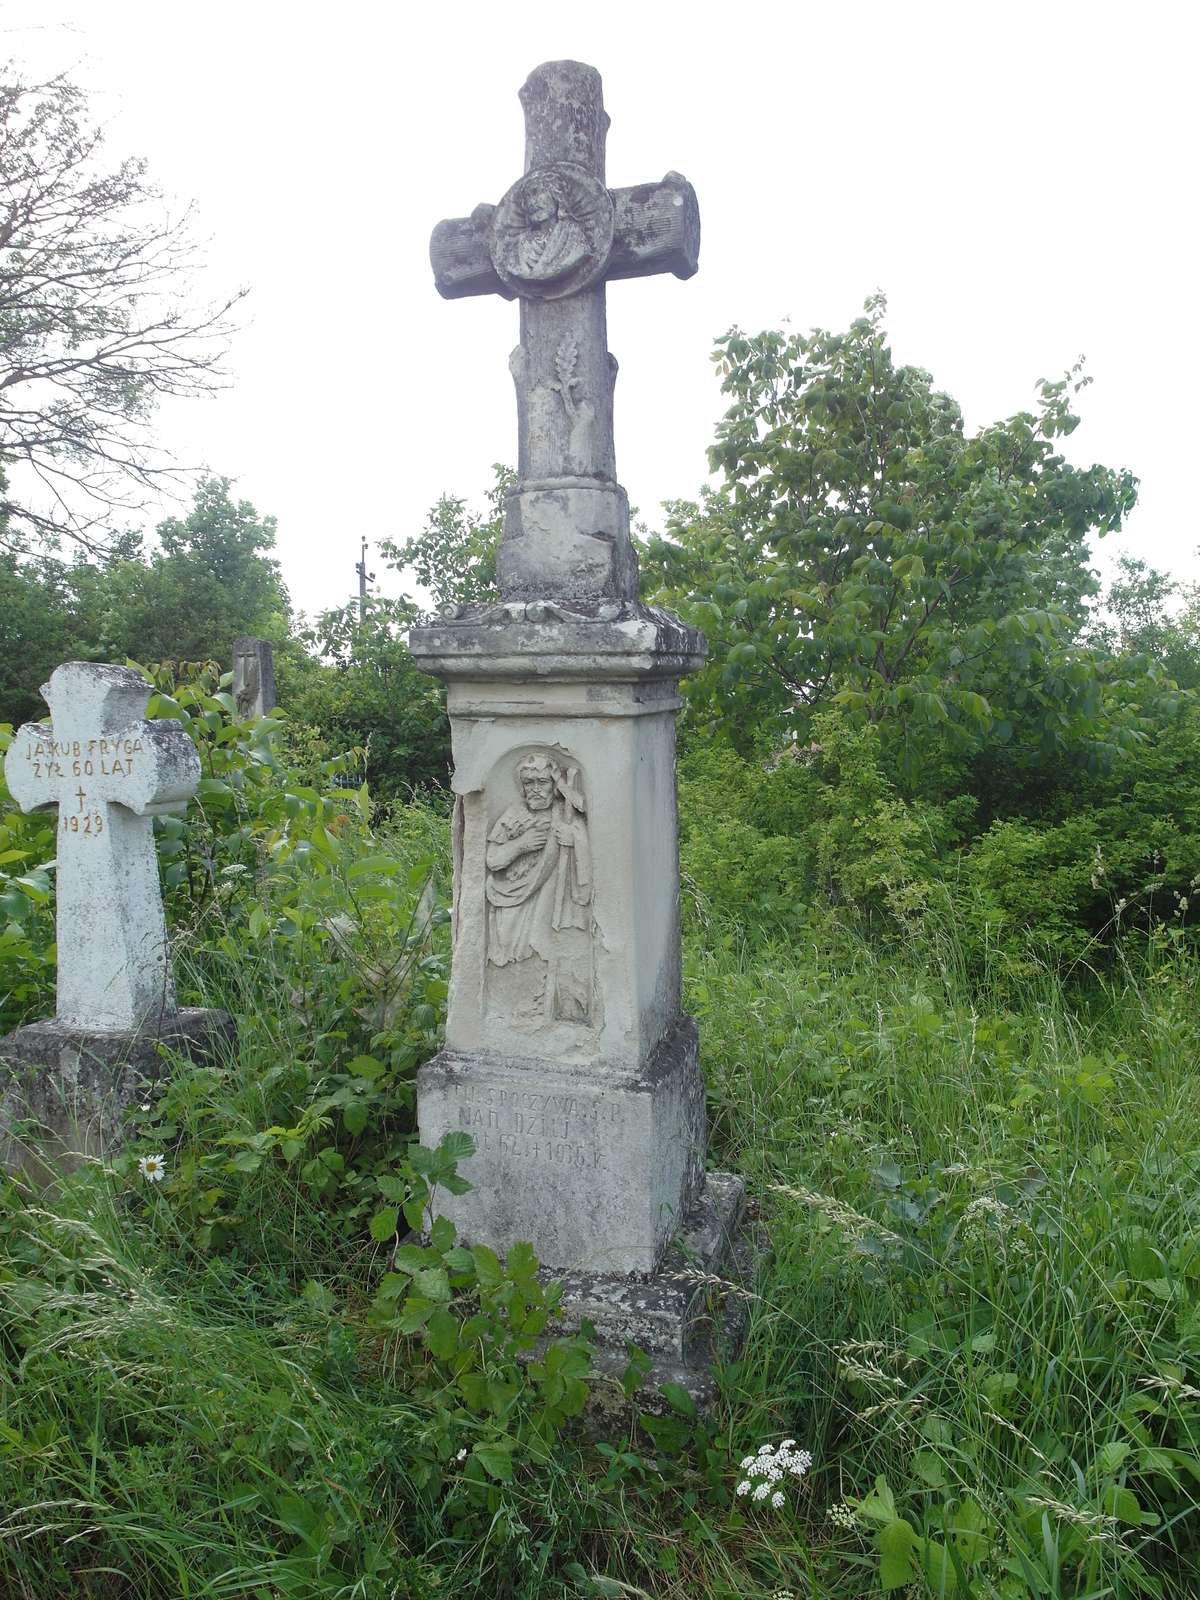 Tombstone of Nan Dzilj, Zbarazh cemetery, as of 2018.